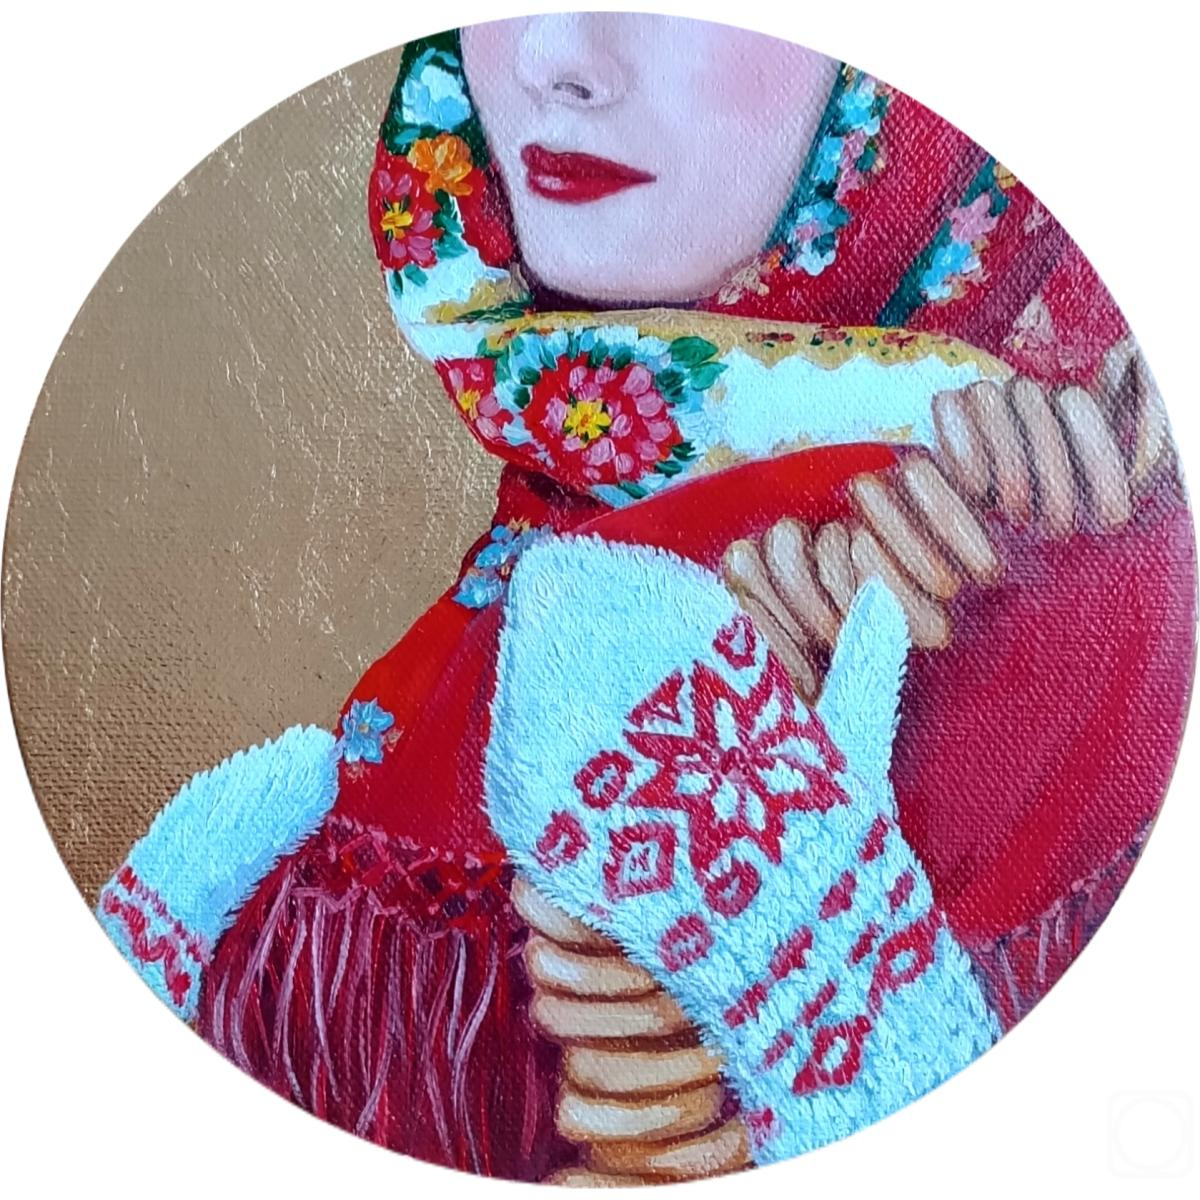 Dmitrieva Olga. Girl with bagels. Russian style